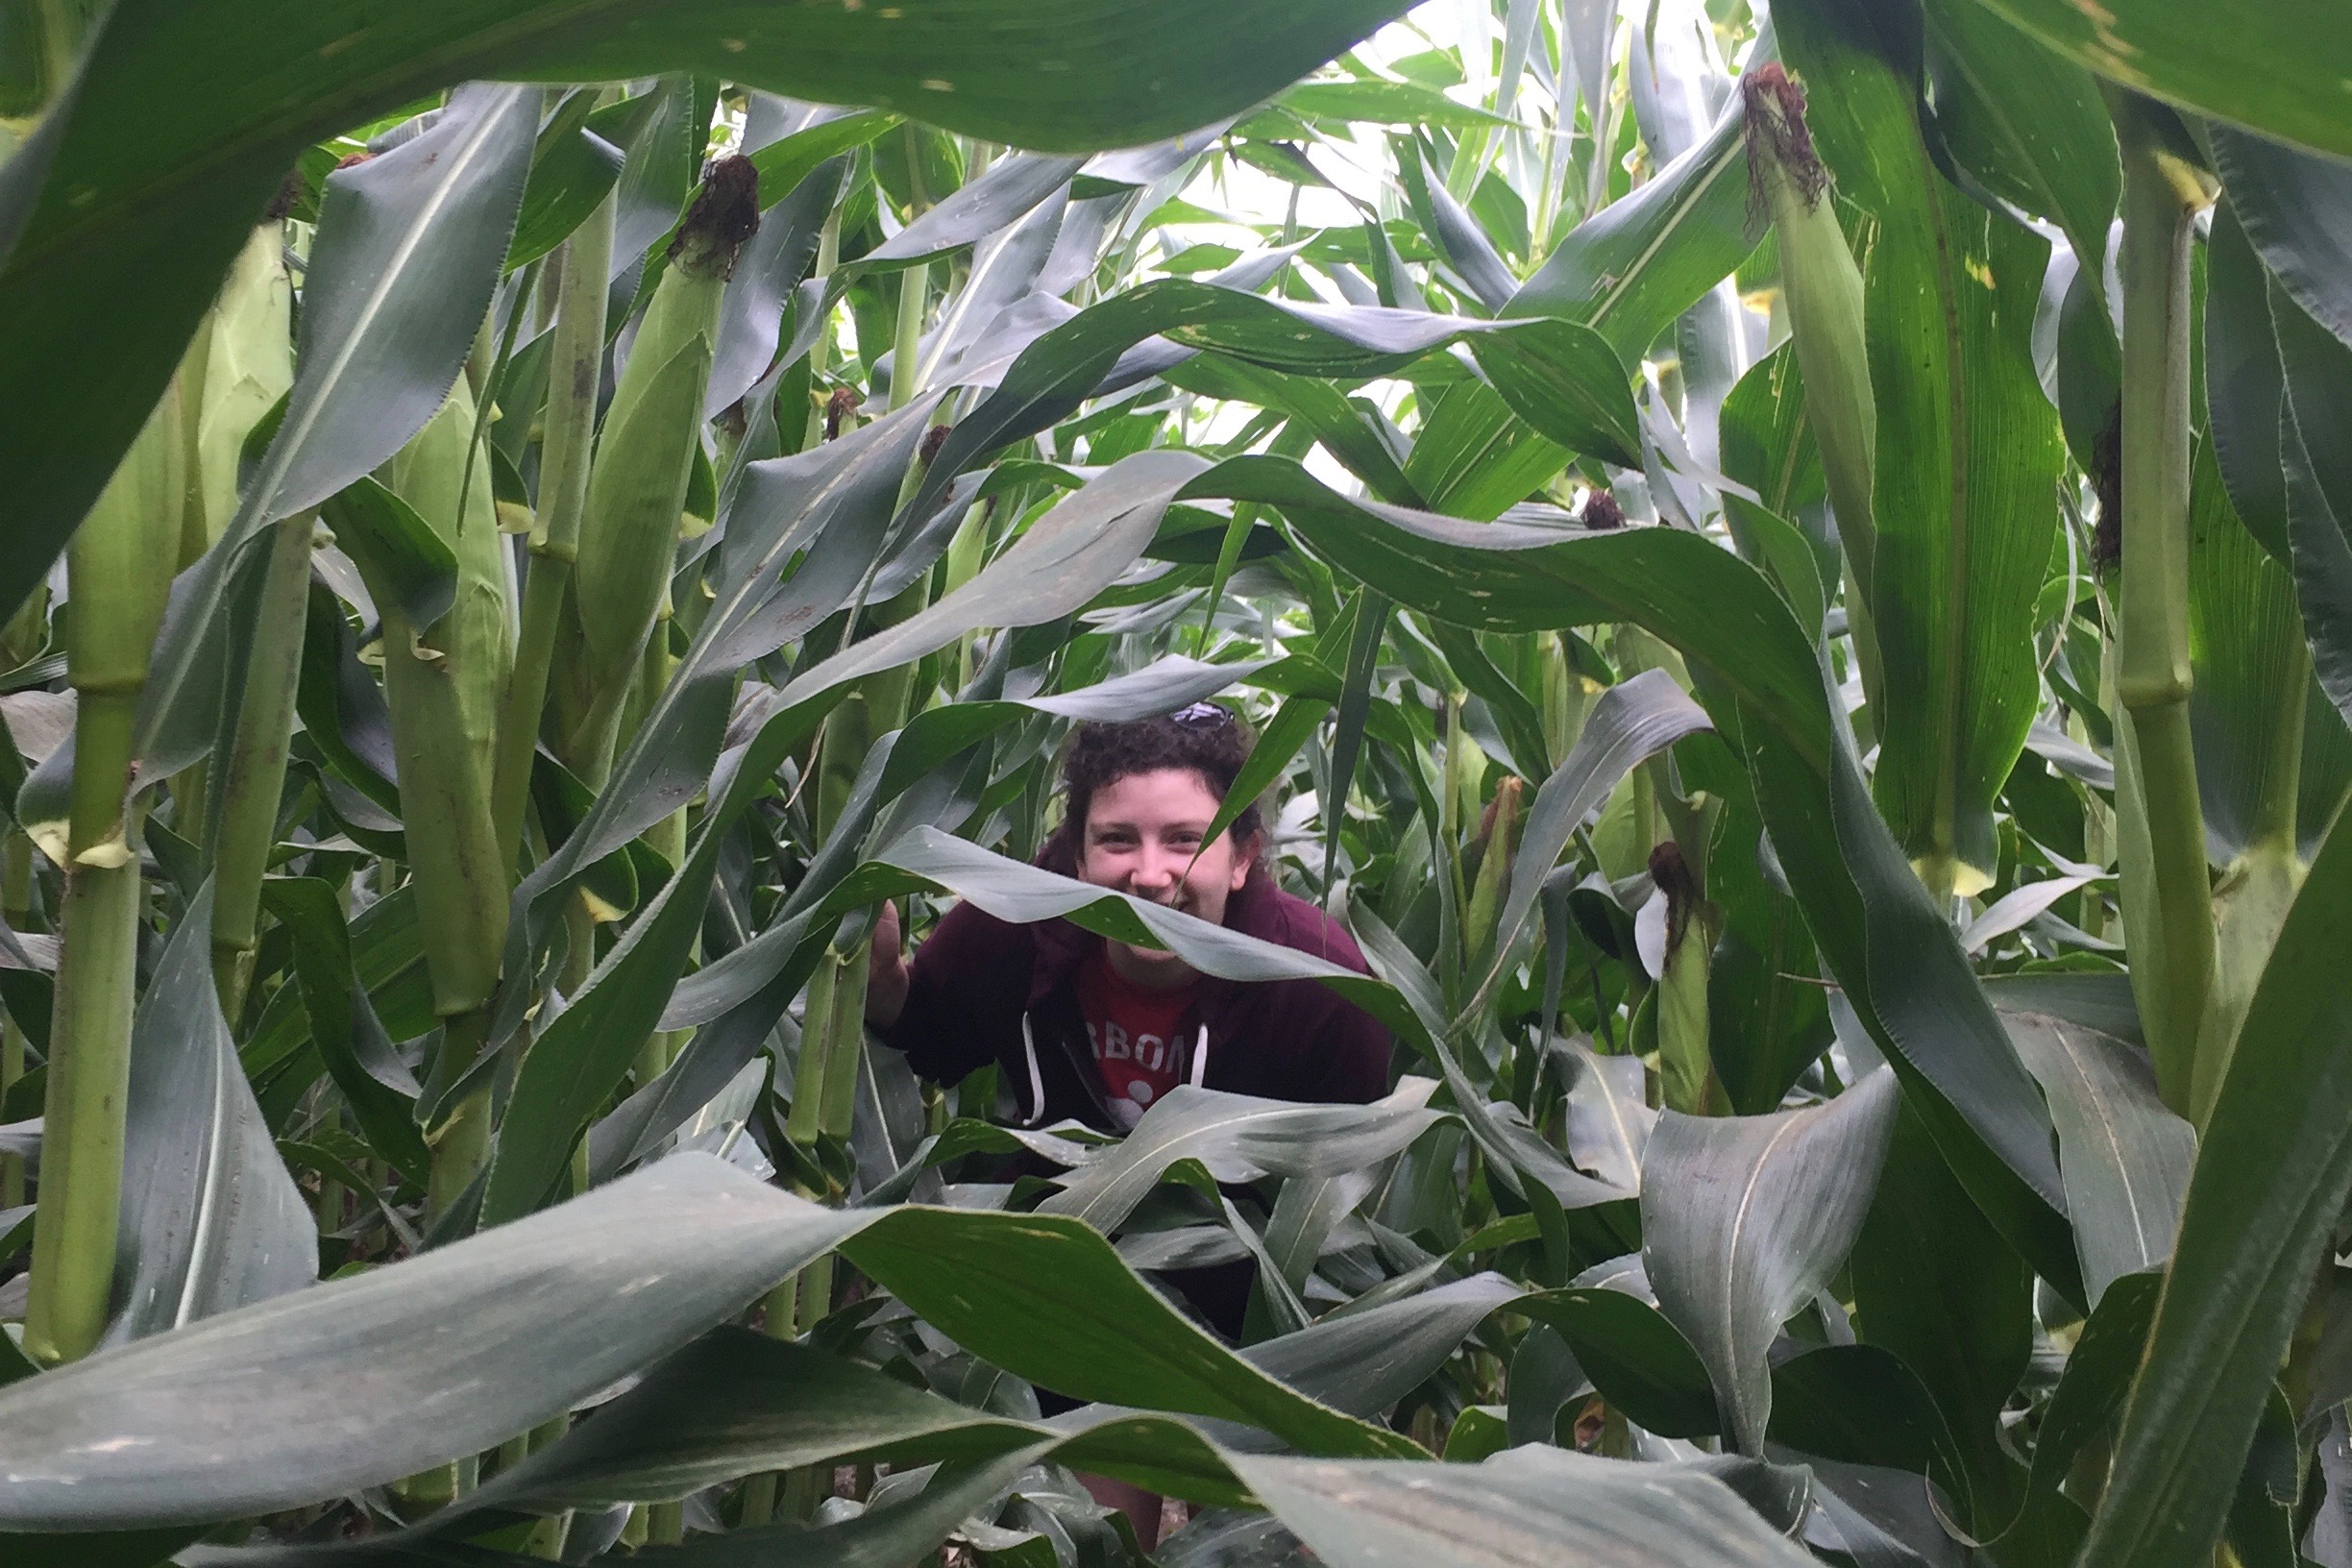 Peeking through corn